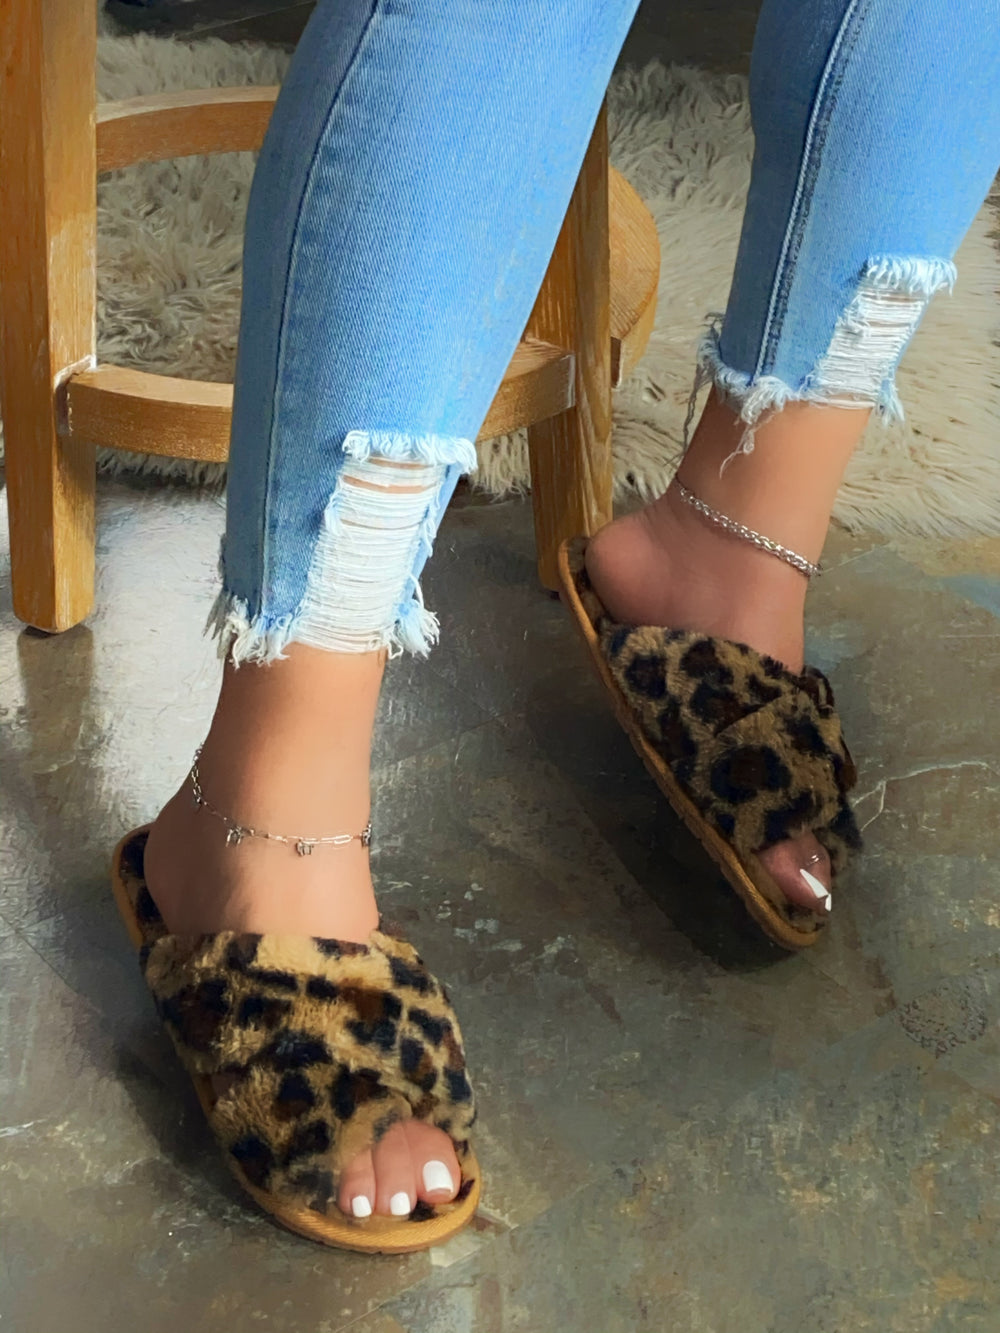 leopard criss cross slippers